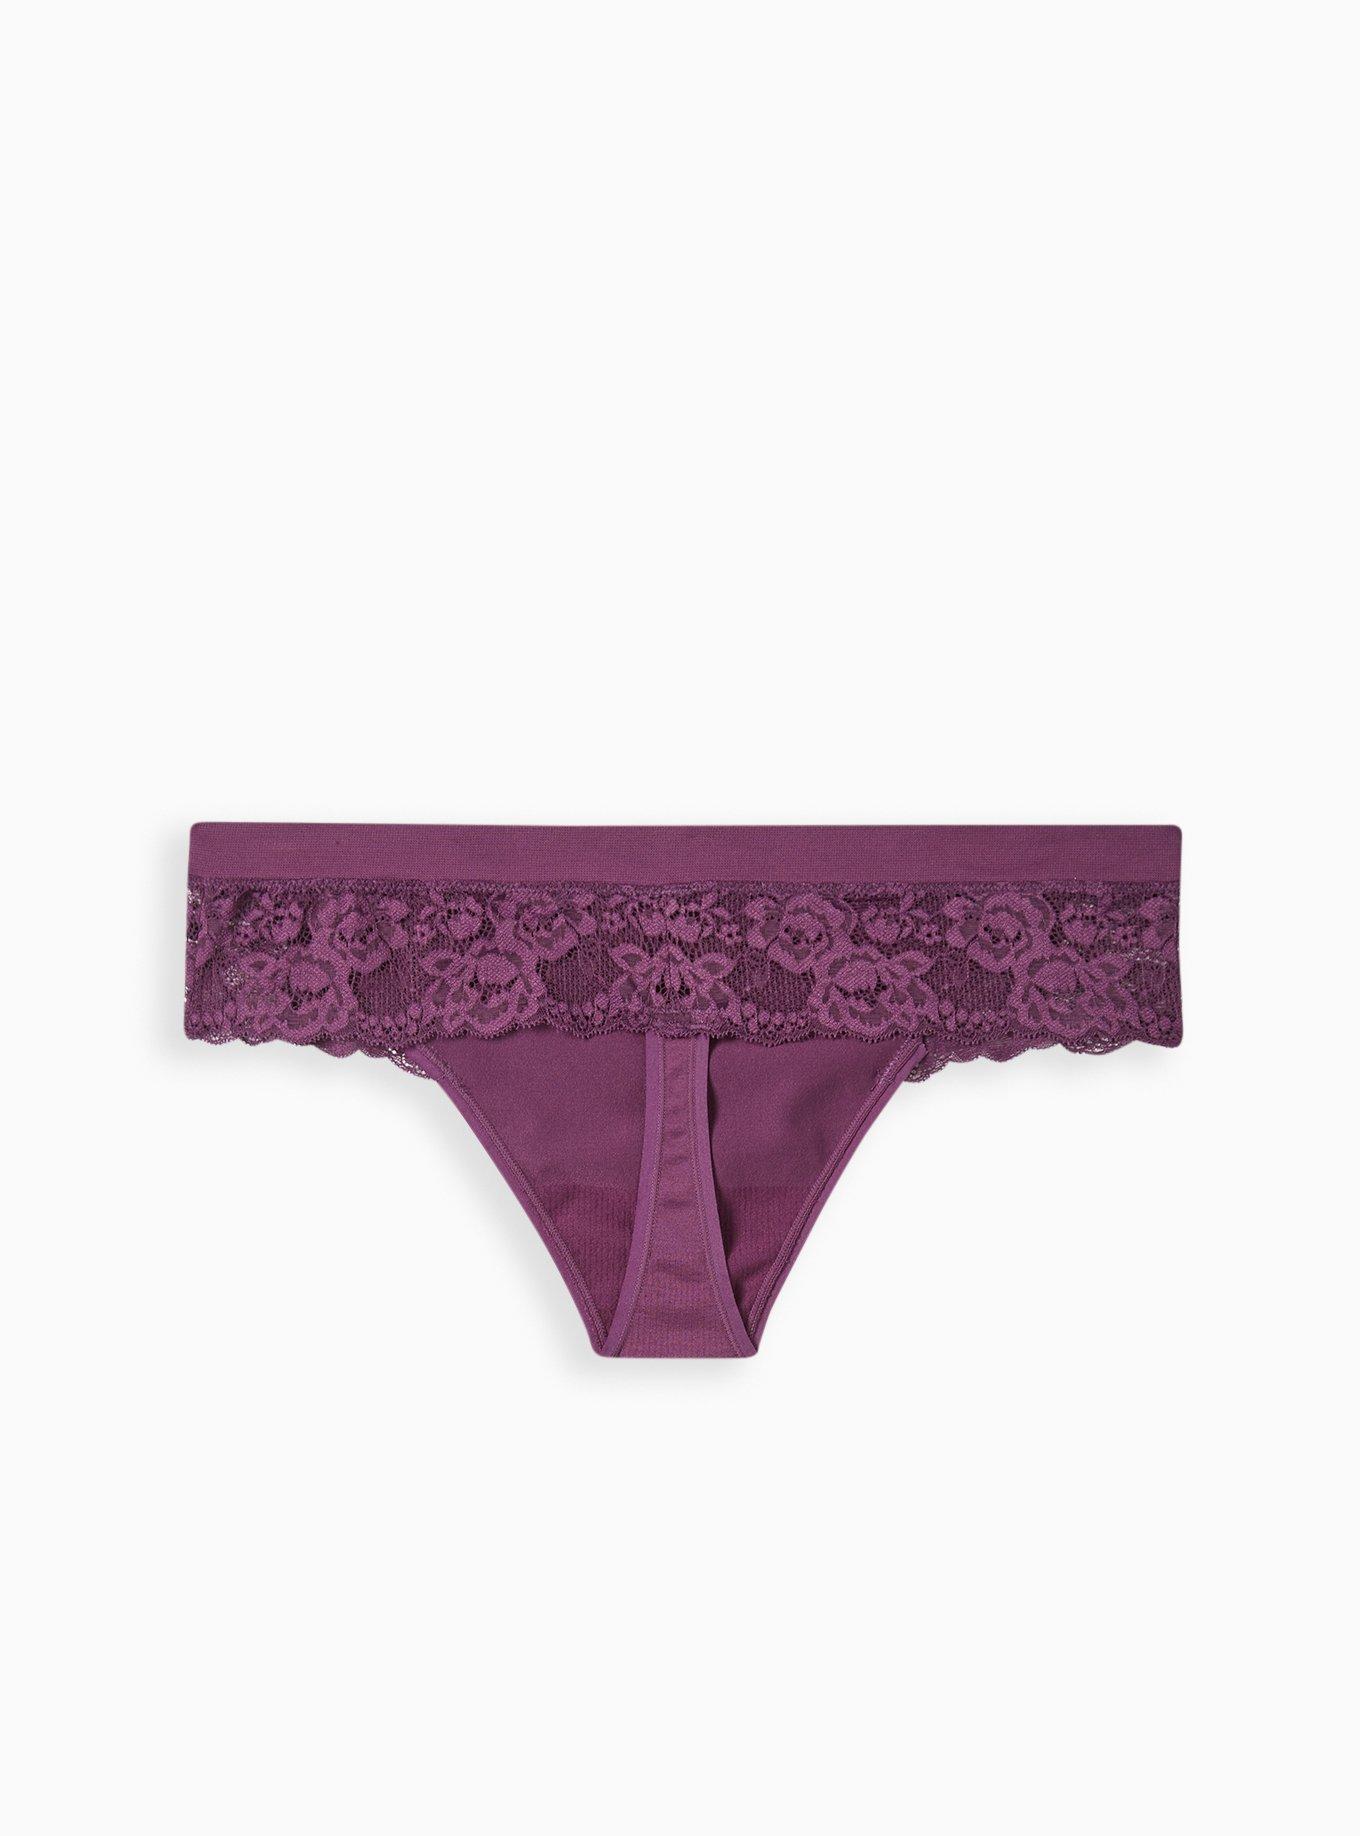 Republic of Curves® Pink Seamless Thongs, Thongs Panties